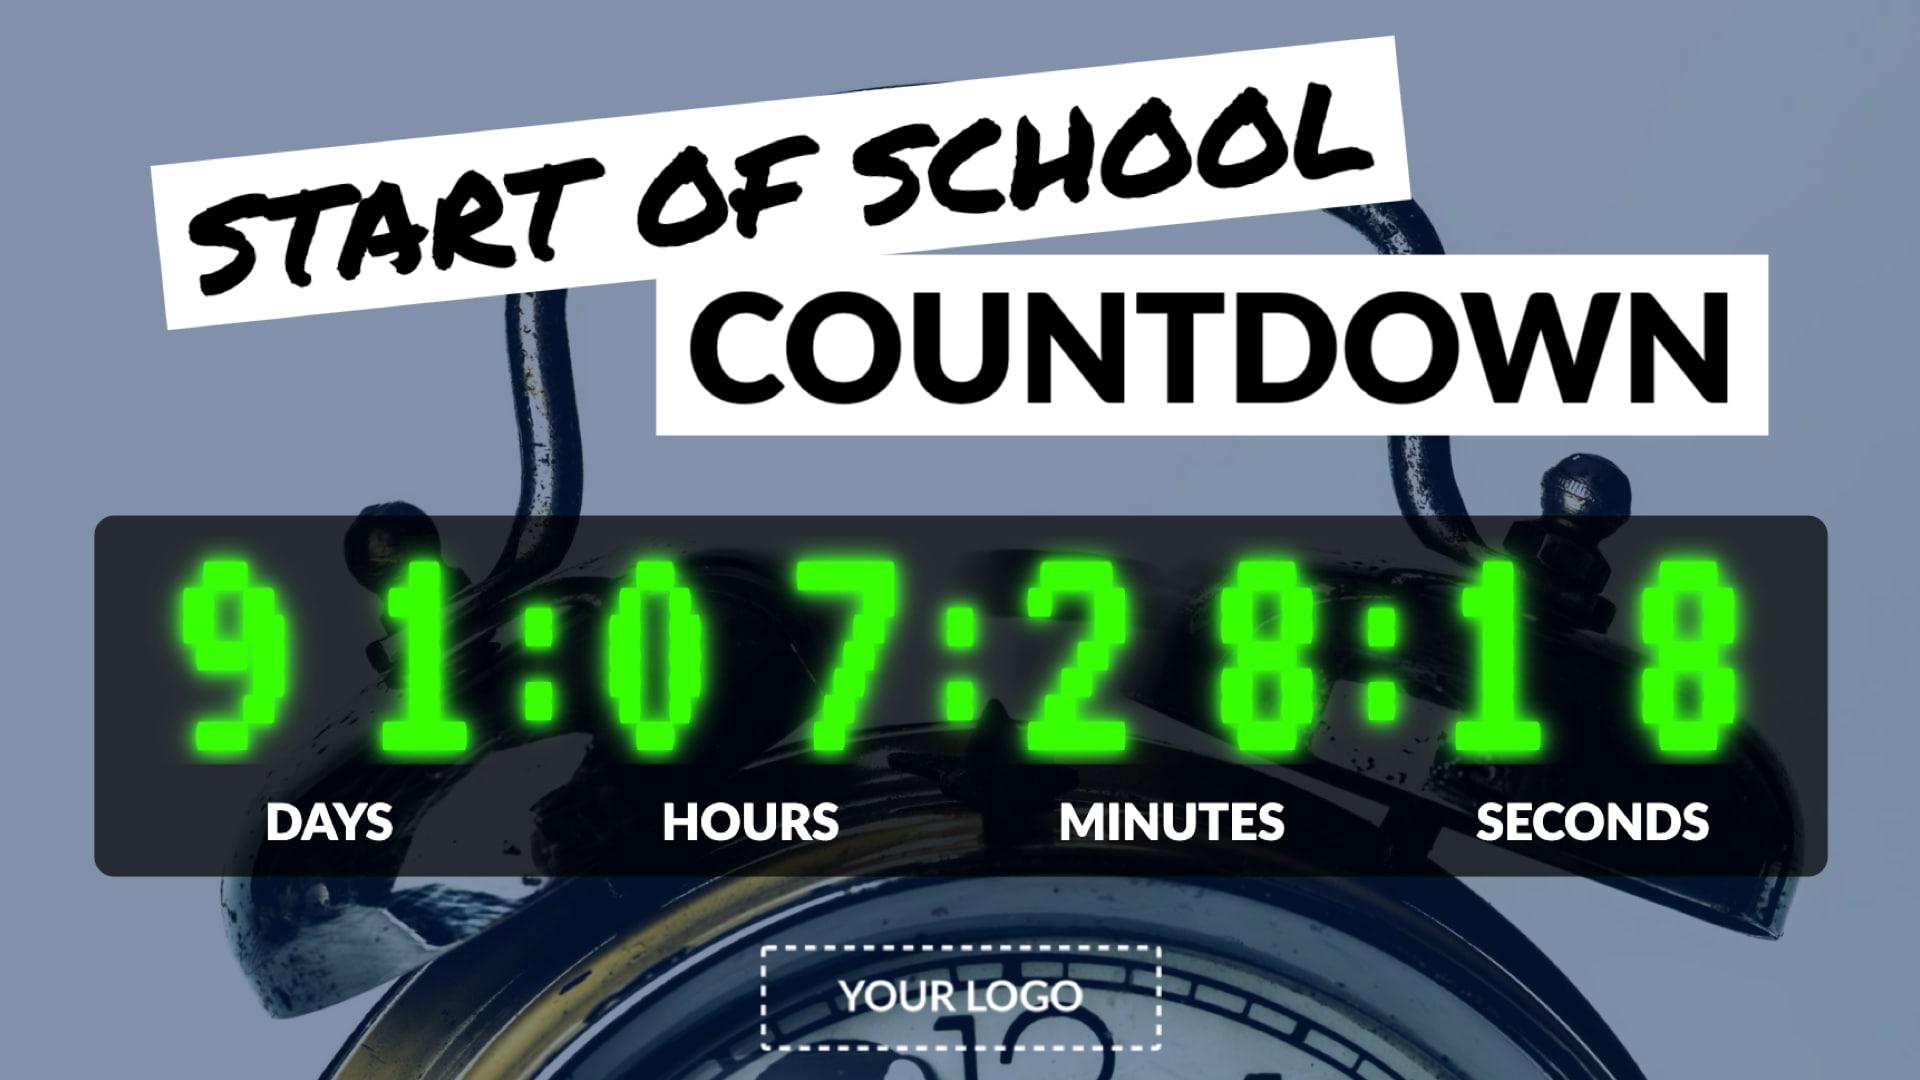 Start of School Countdown Digital Signage Template